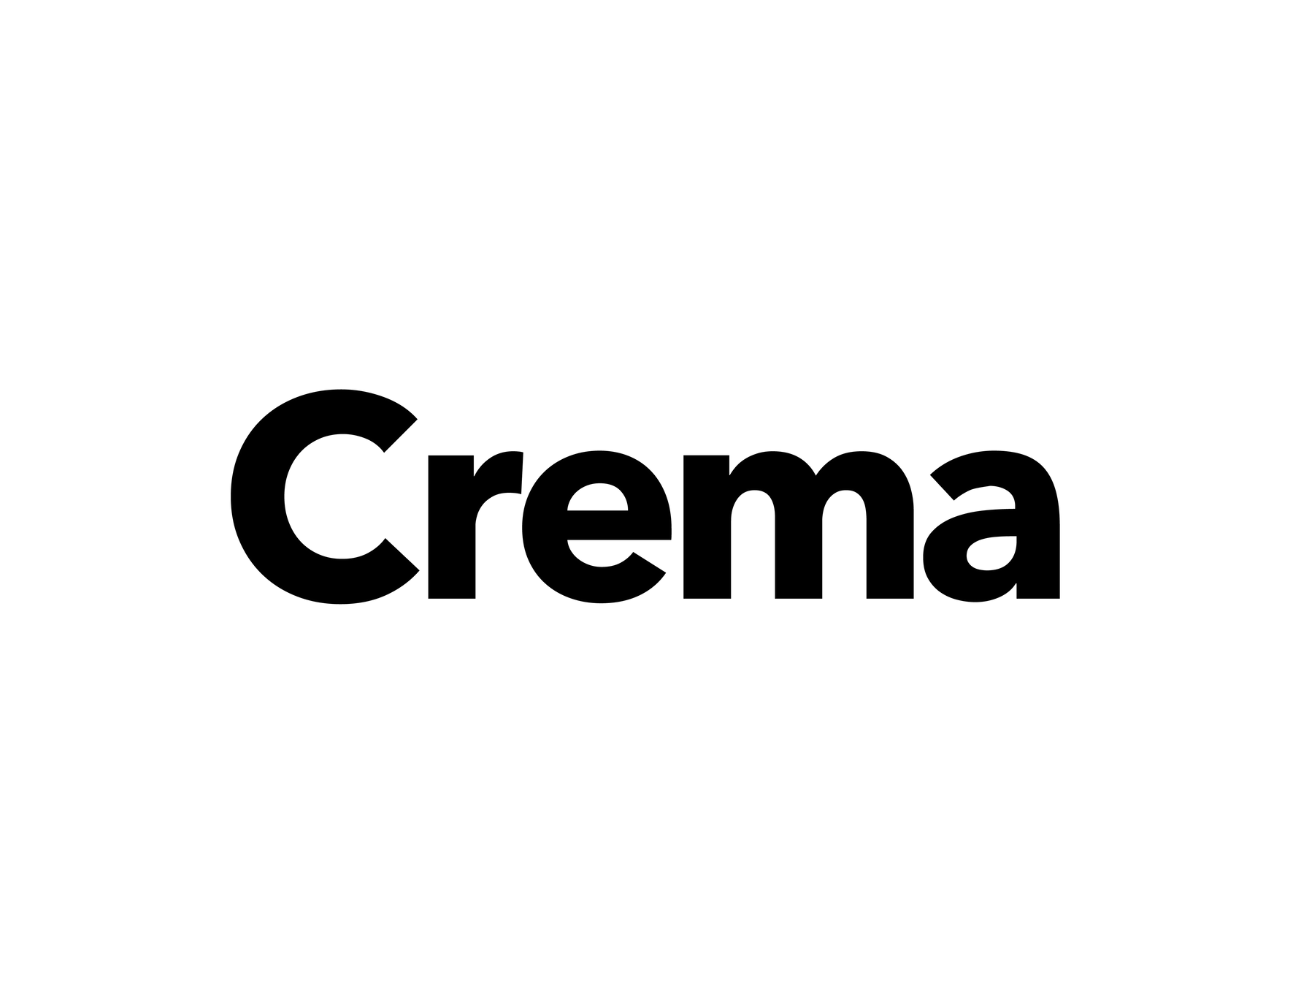 Crema logo